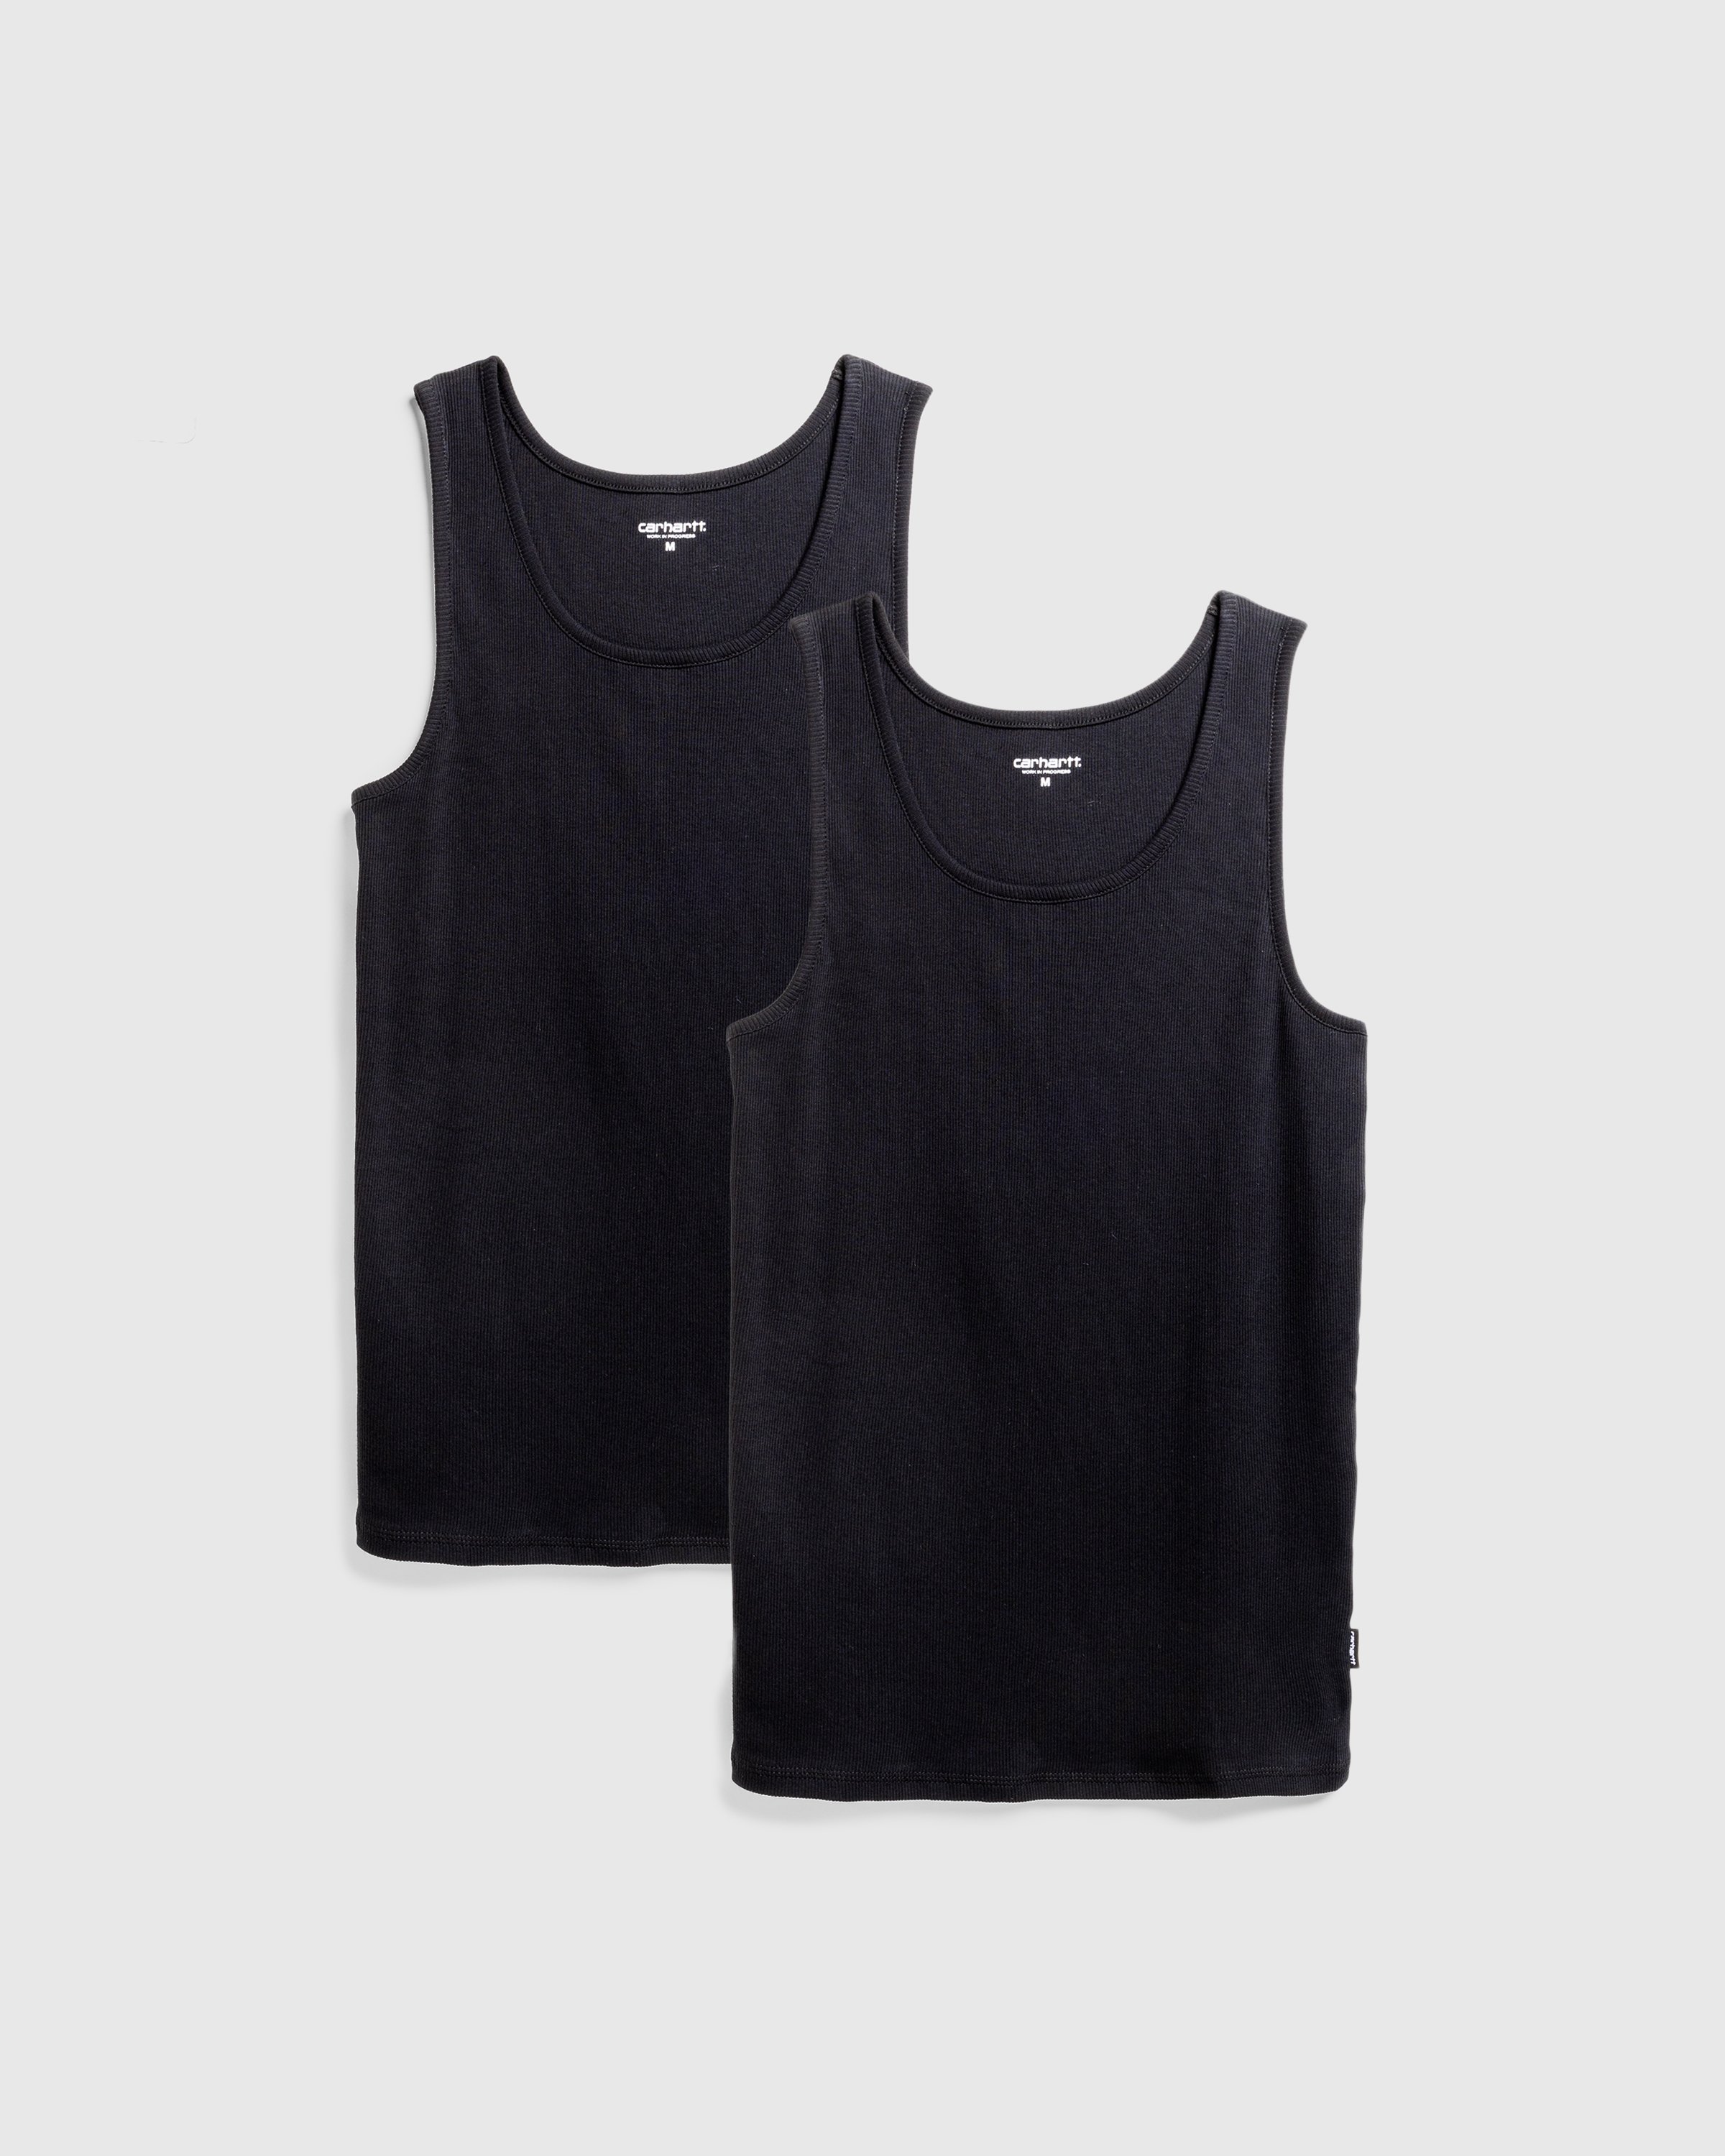 Carhartt WIP - AShirt Black + Black - Clothing - Black - Image 1